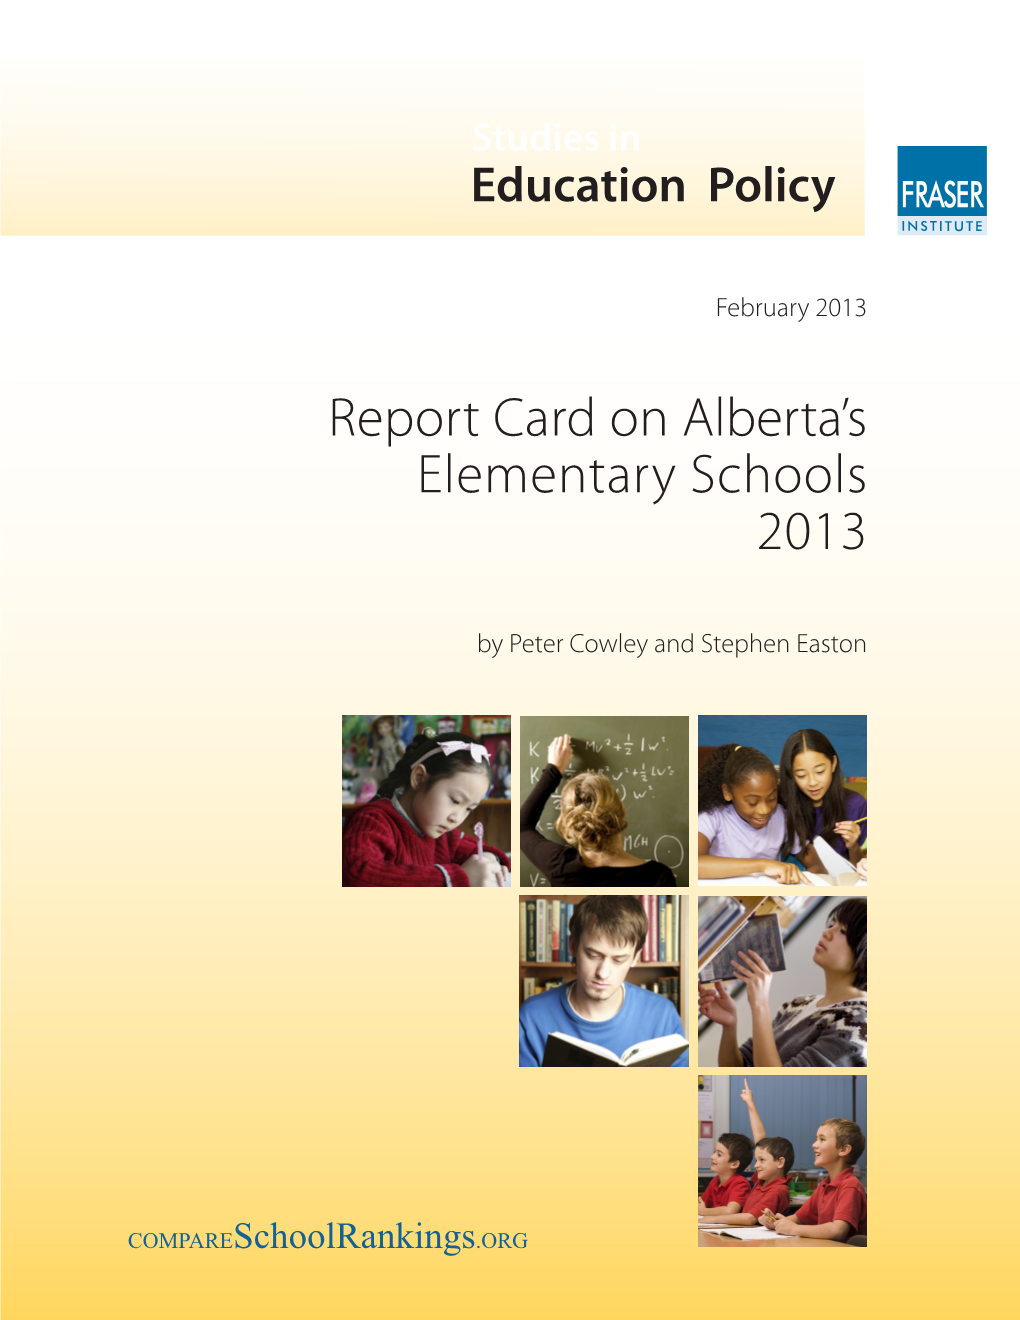 Report Card on Alberta's Elementary Schools 2013